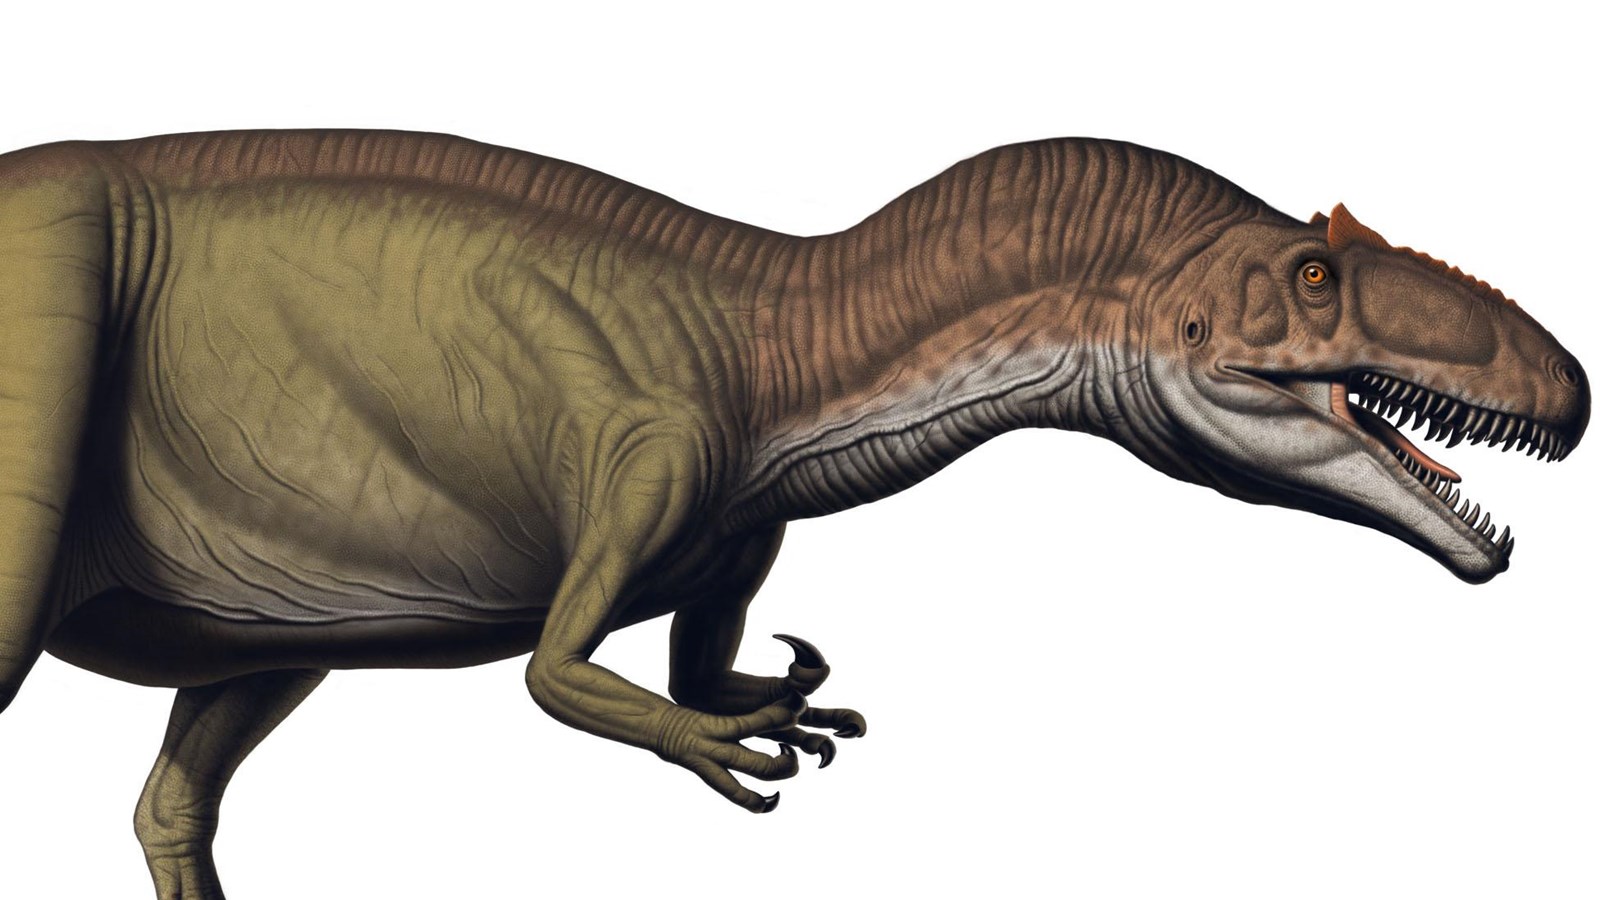 A large 2-legged carnivorous dinosaur with large claws and eye ridges.